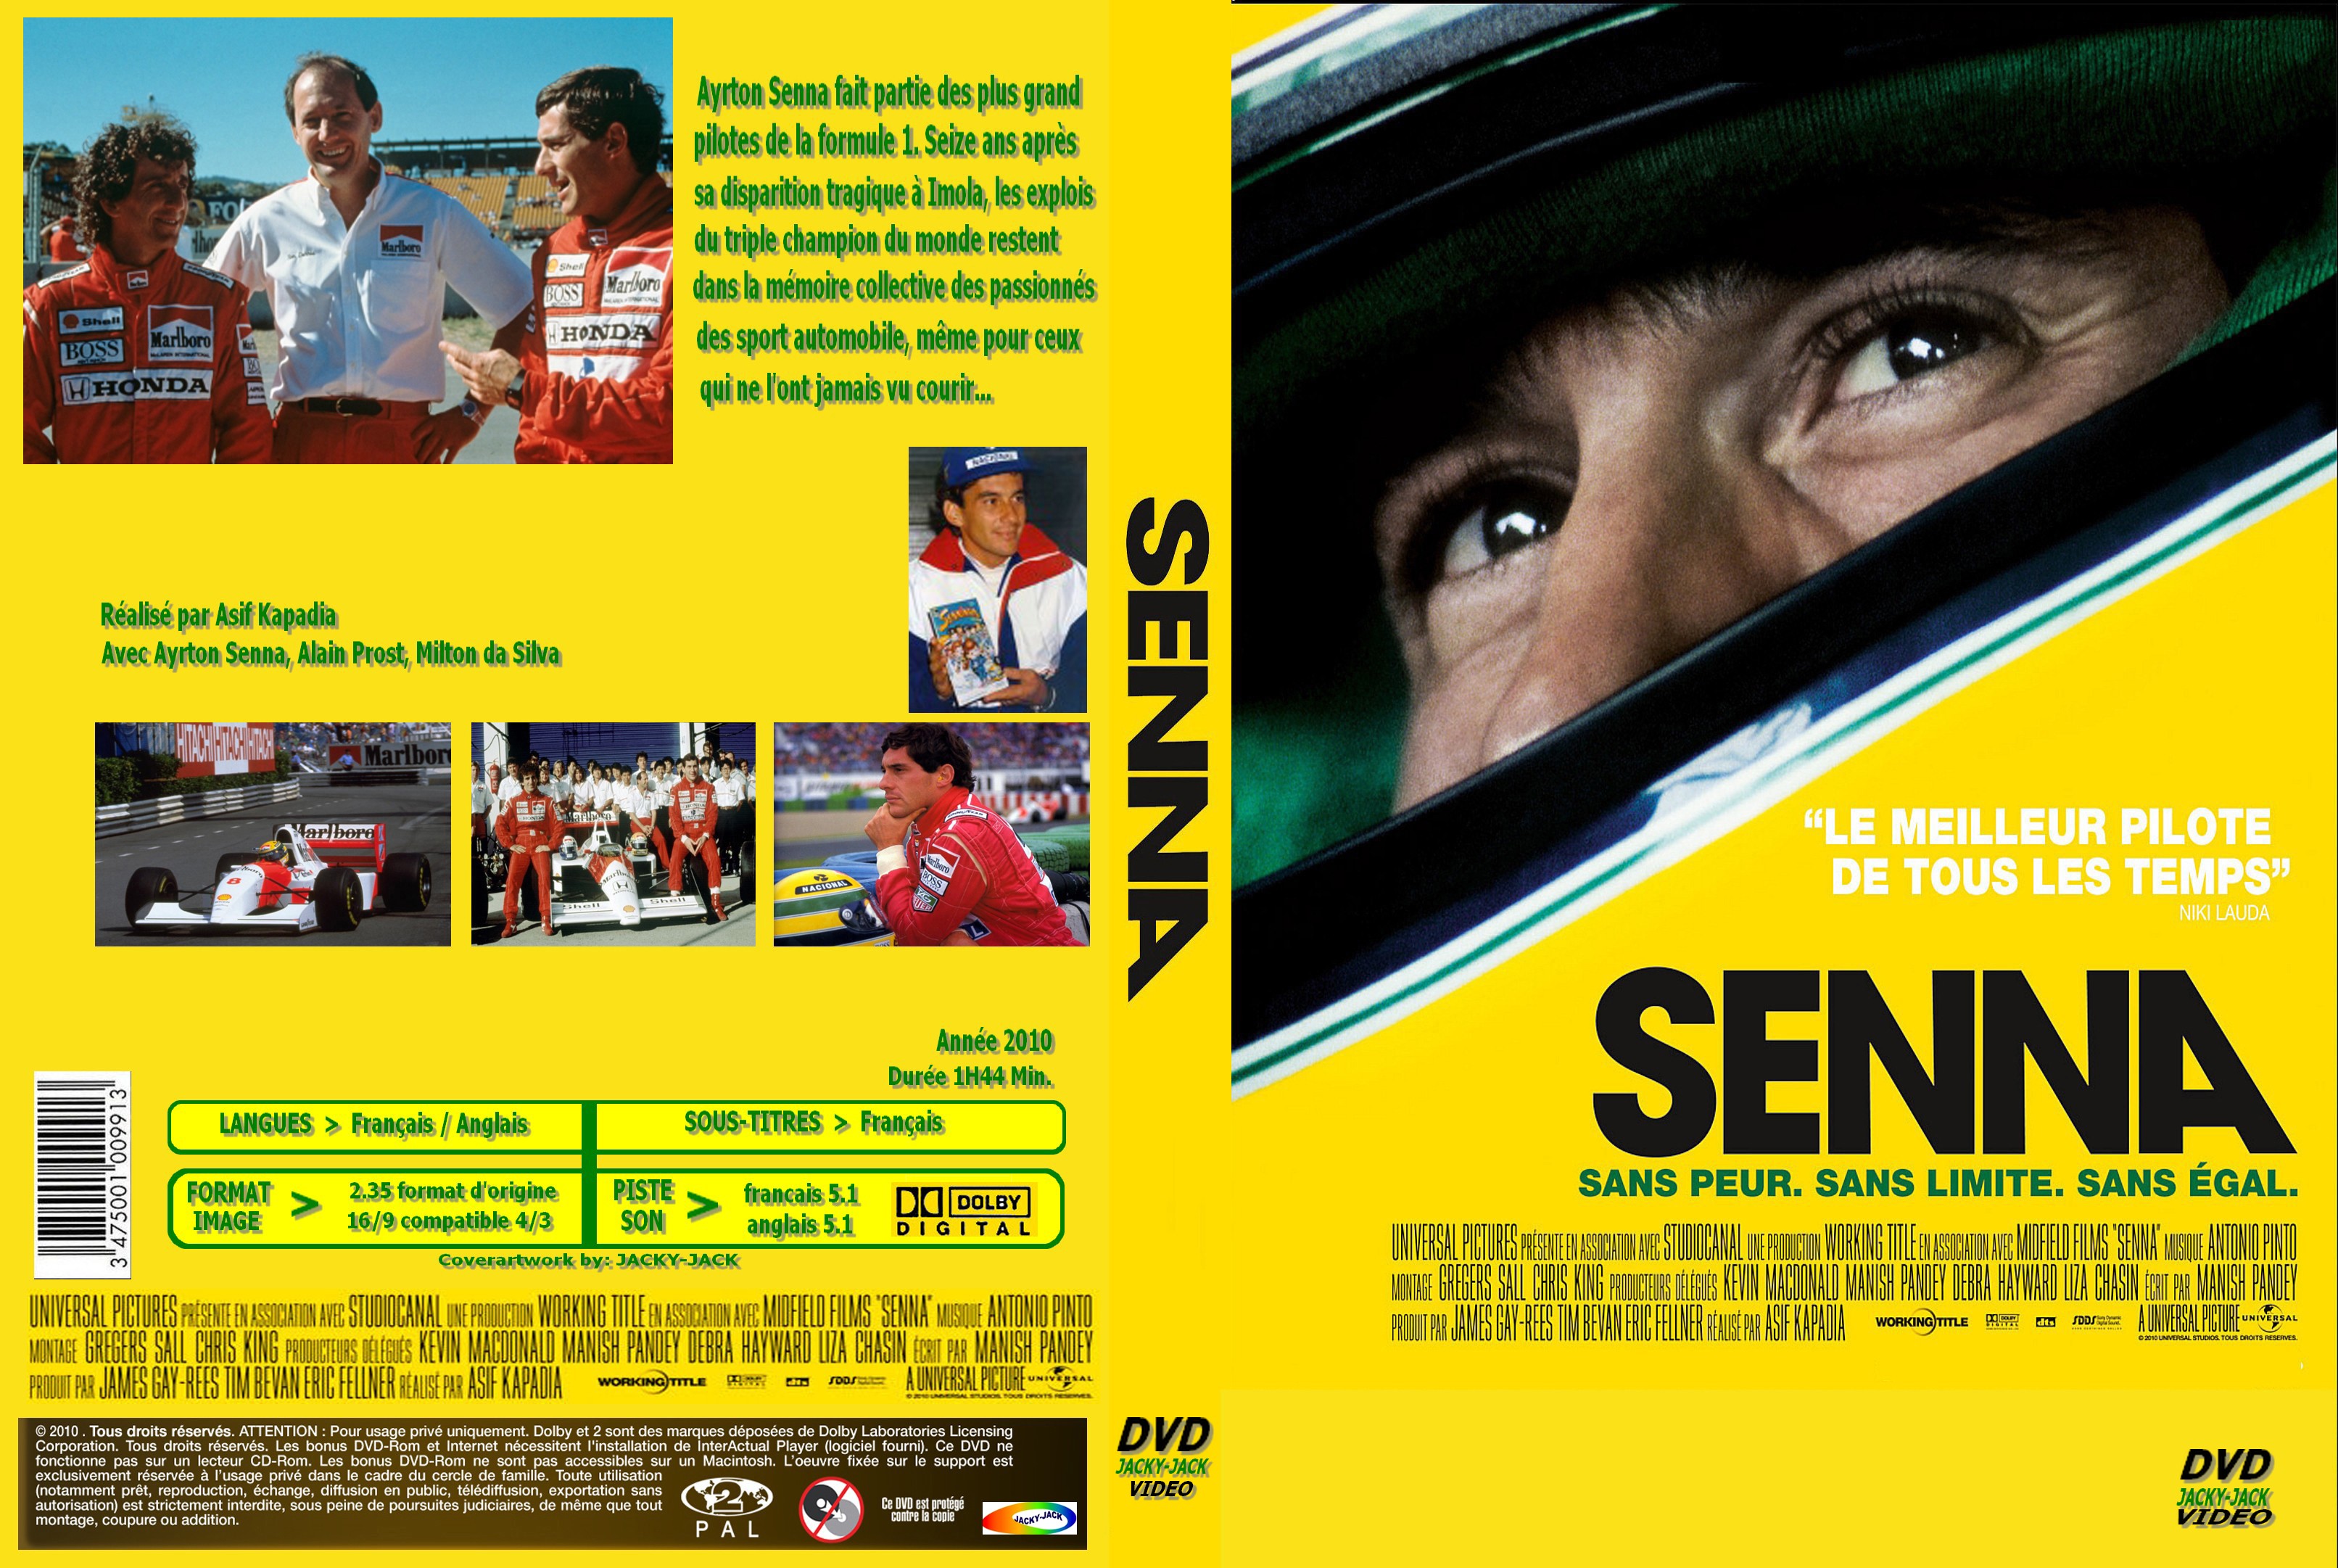 Jaquette DVD Senna custom